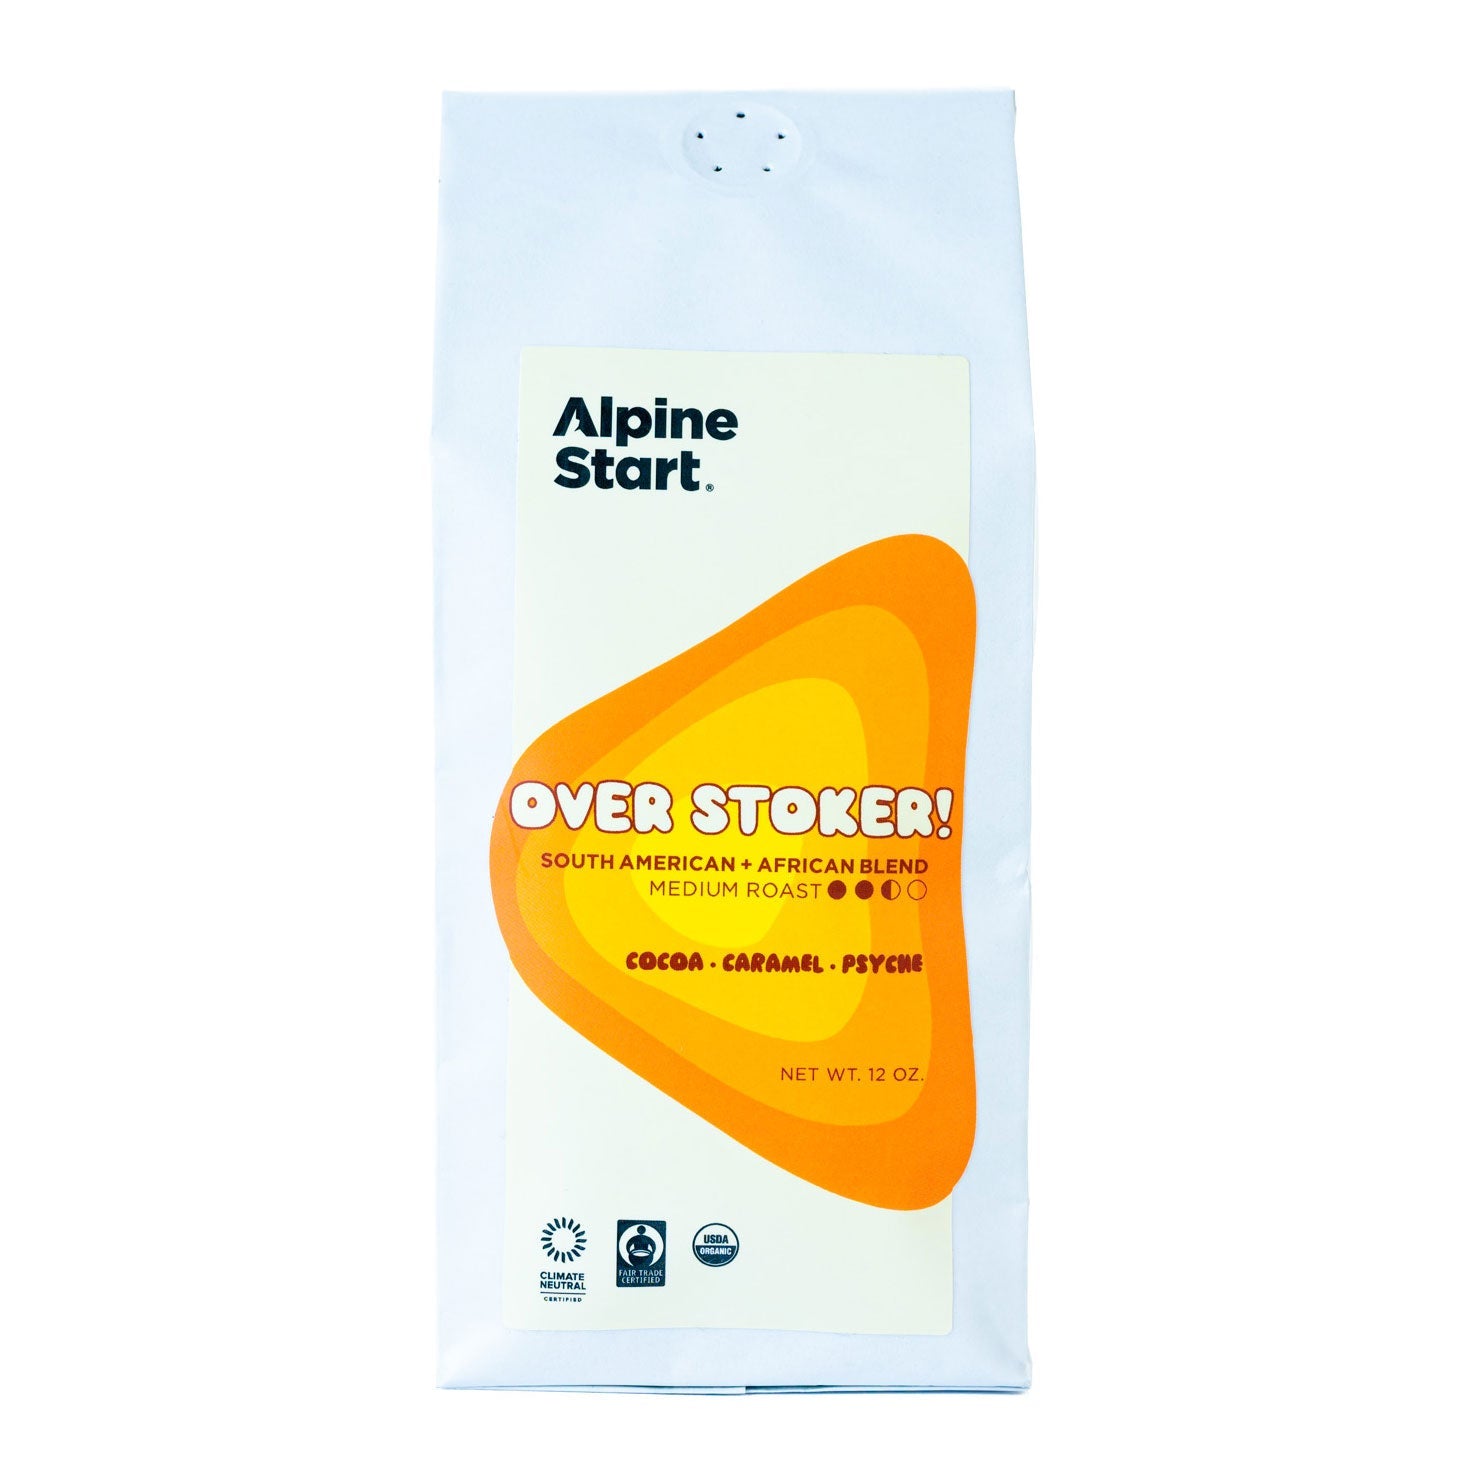 Over Stoker! Whole Bean Coffee - Alpine Start